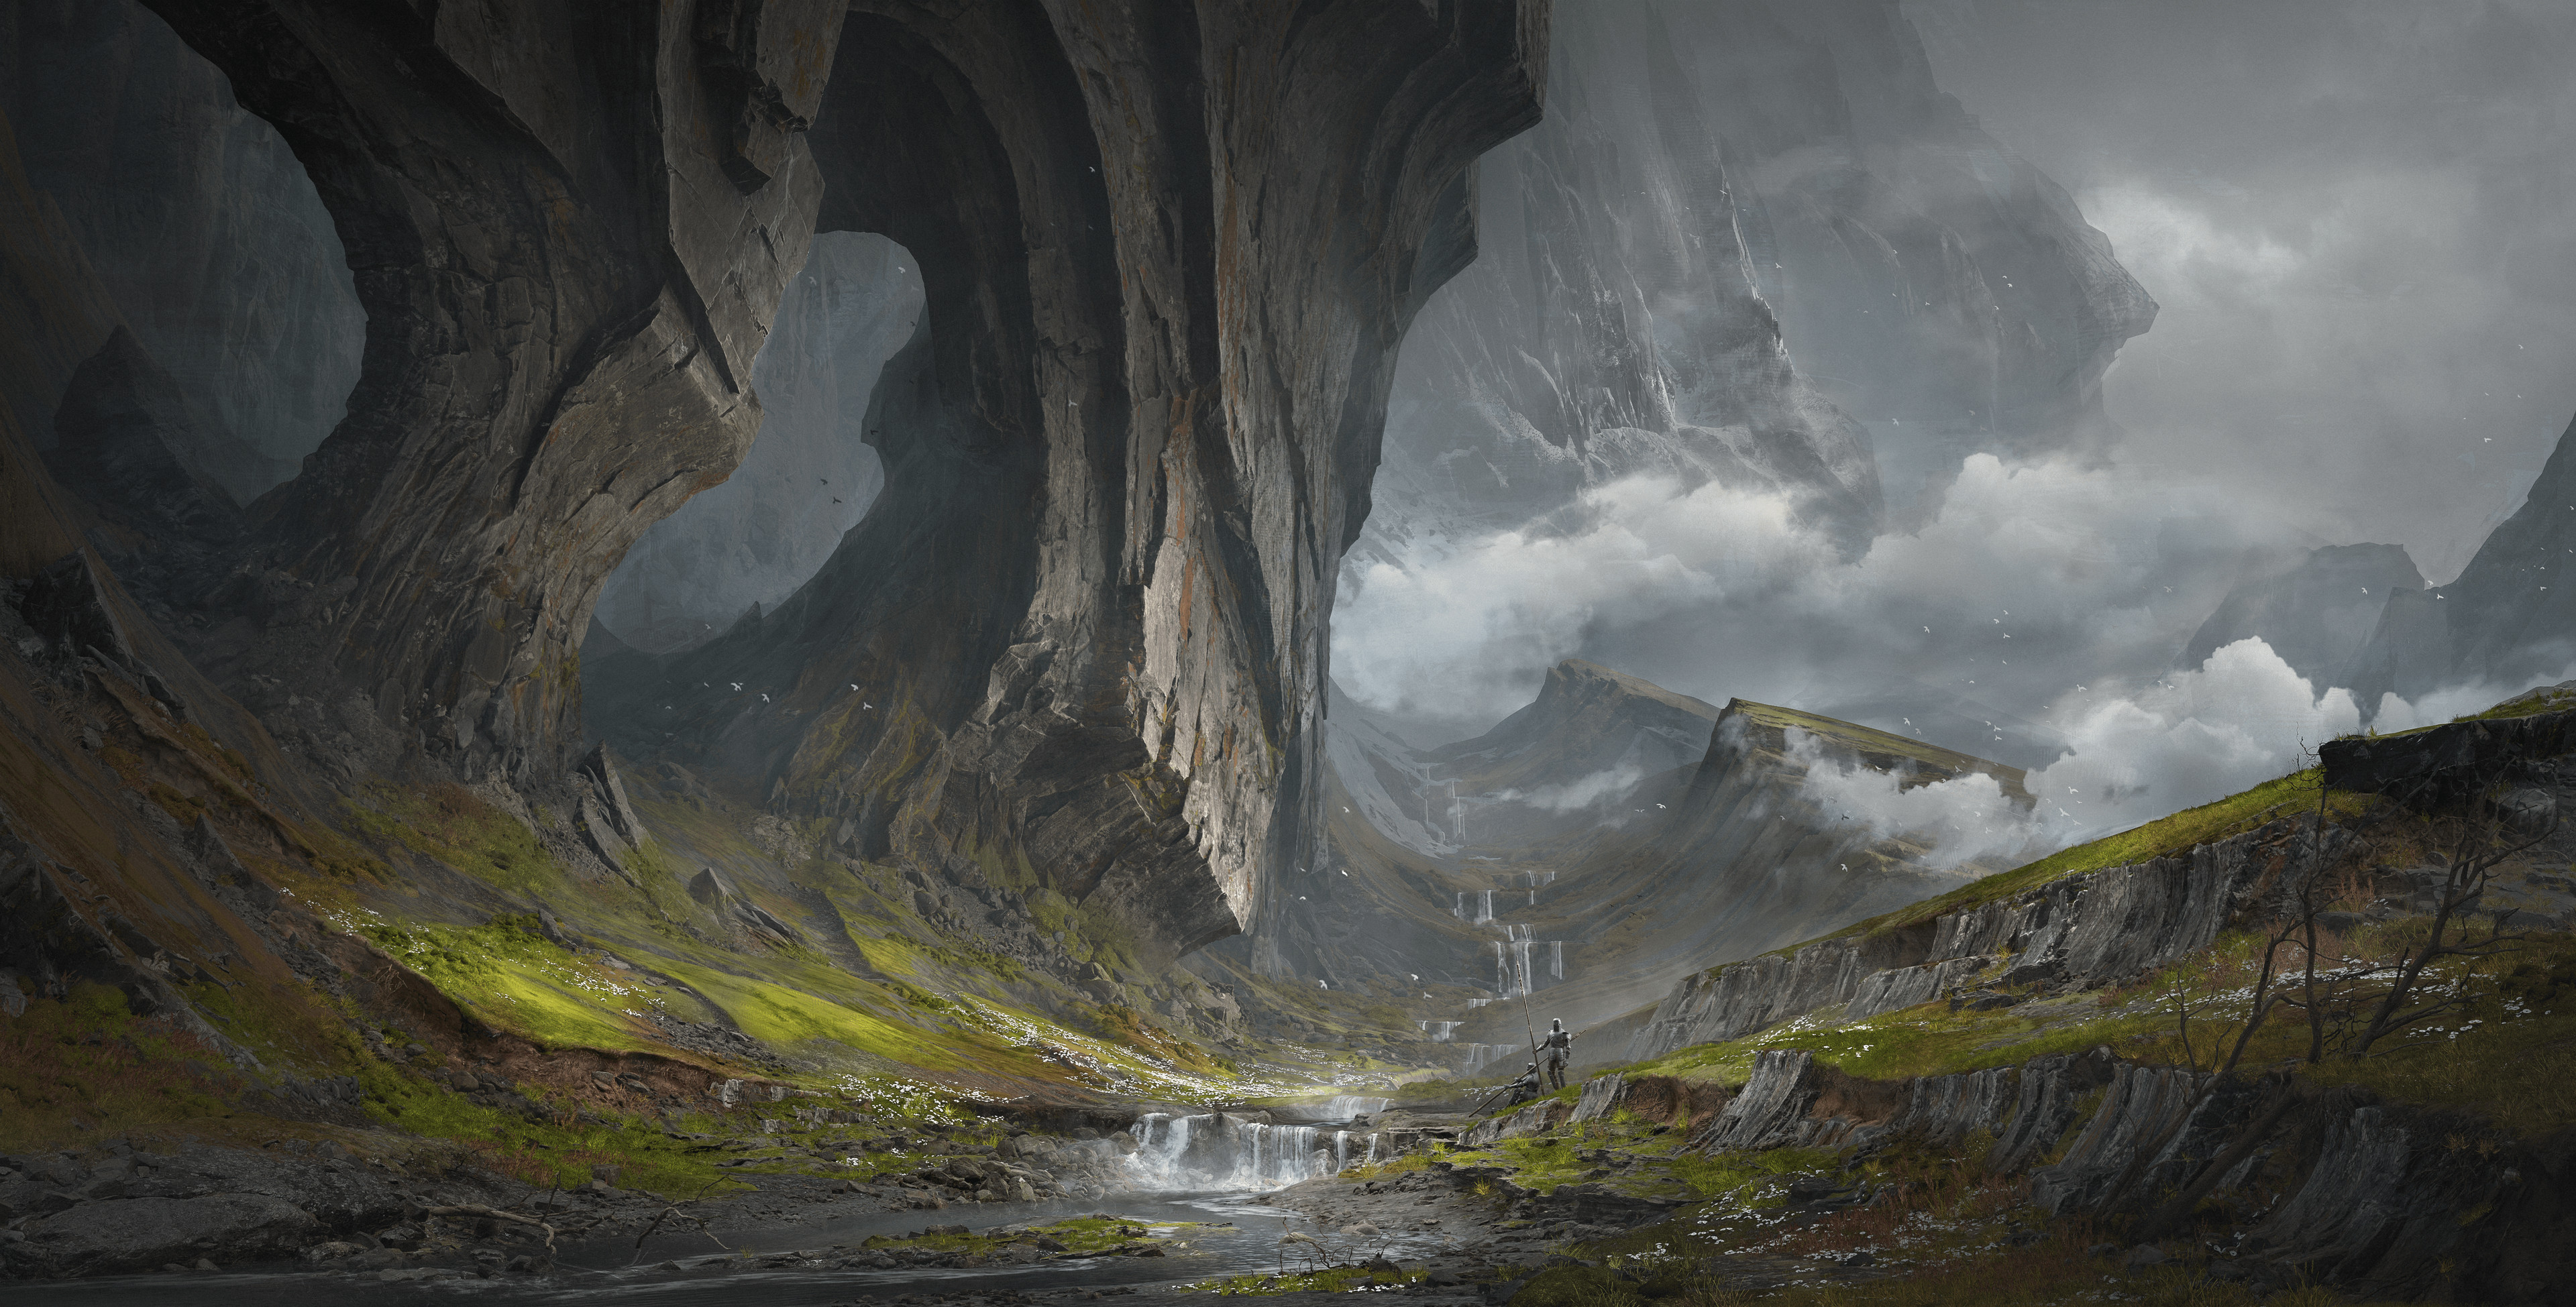 Digital Digital Art Artwork Illustration Nature Rock Formation Mountains Environment Fantasy Art Con 3840x1949